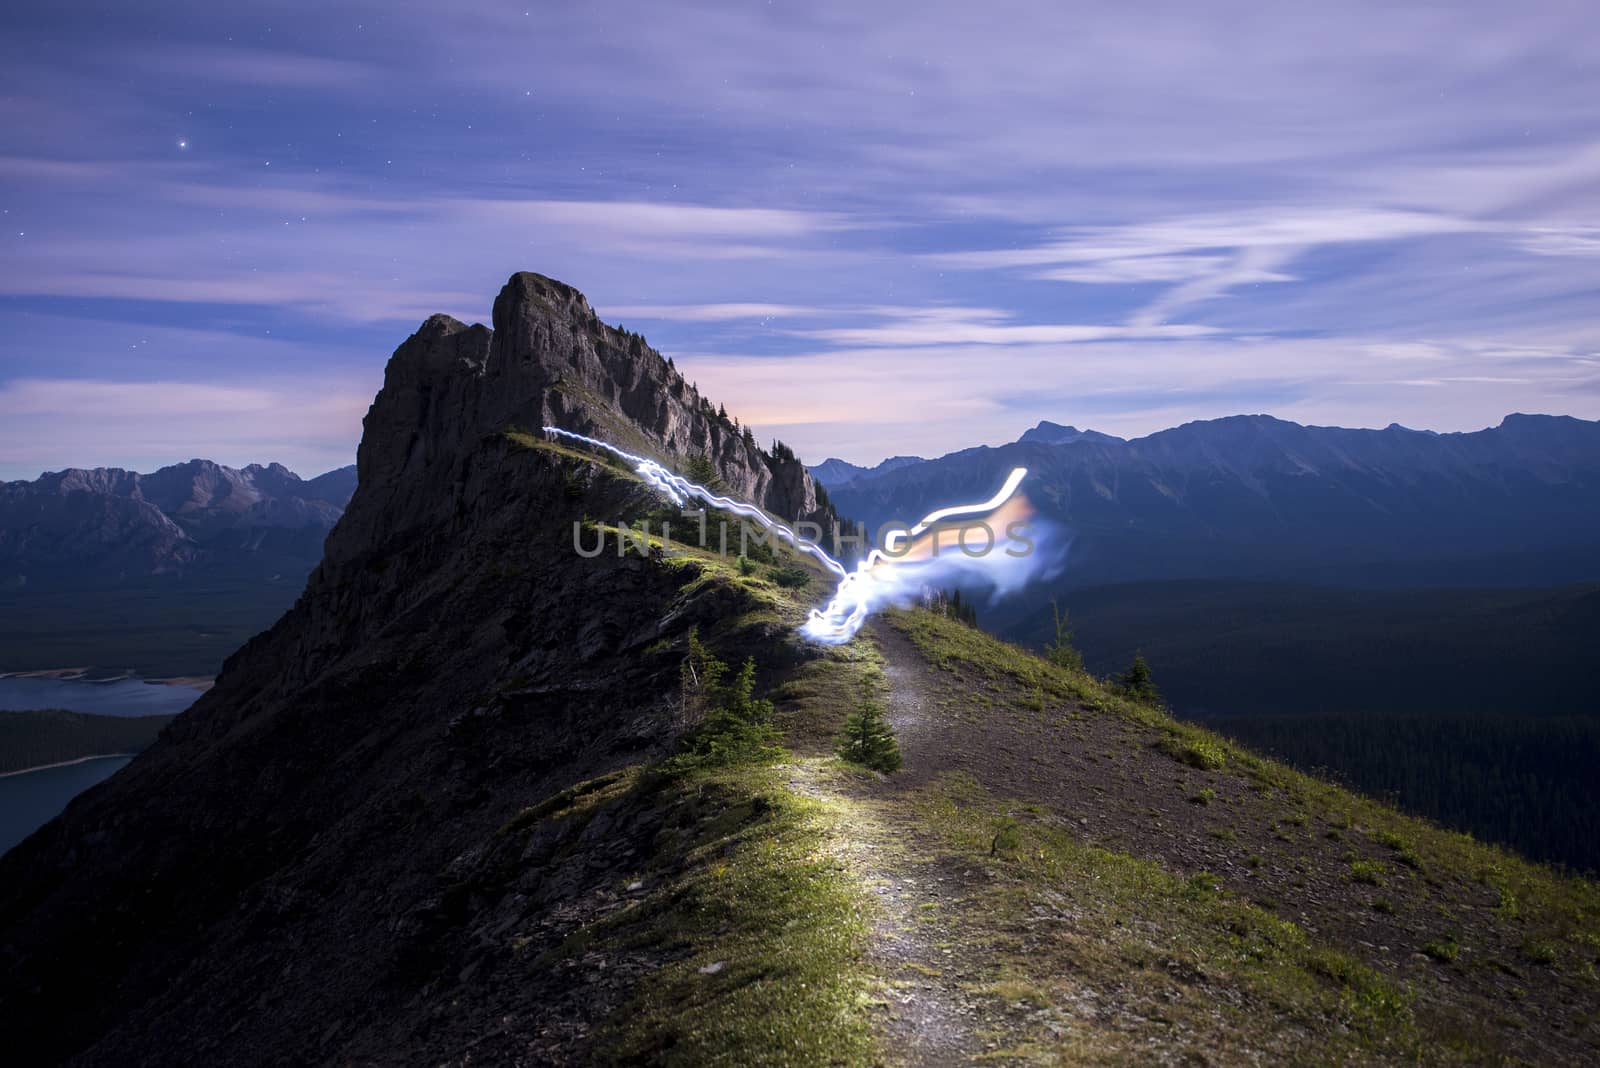 Light trail running along ridge of mountain lit up at night